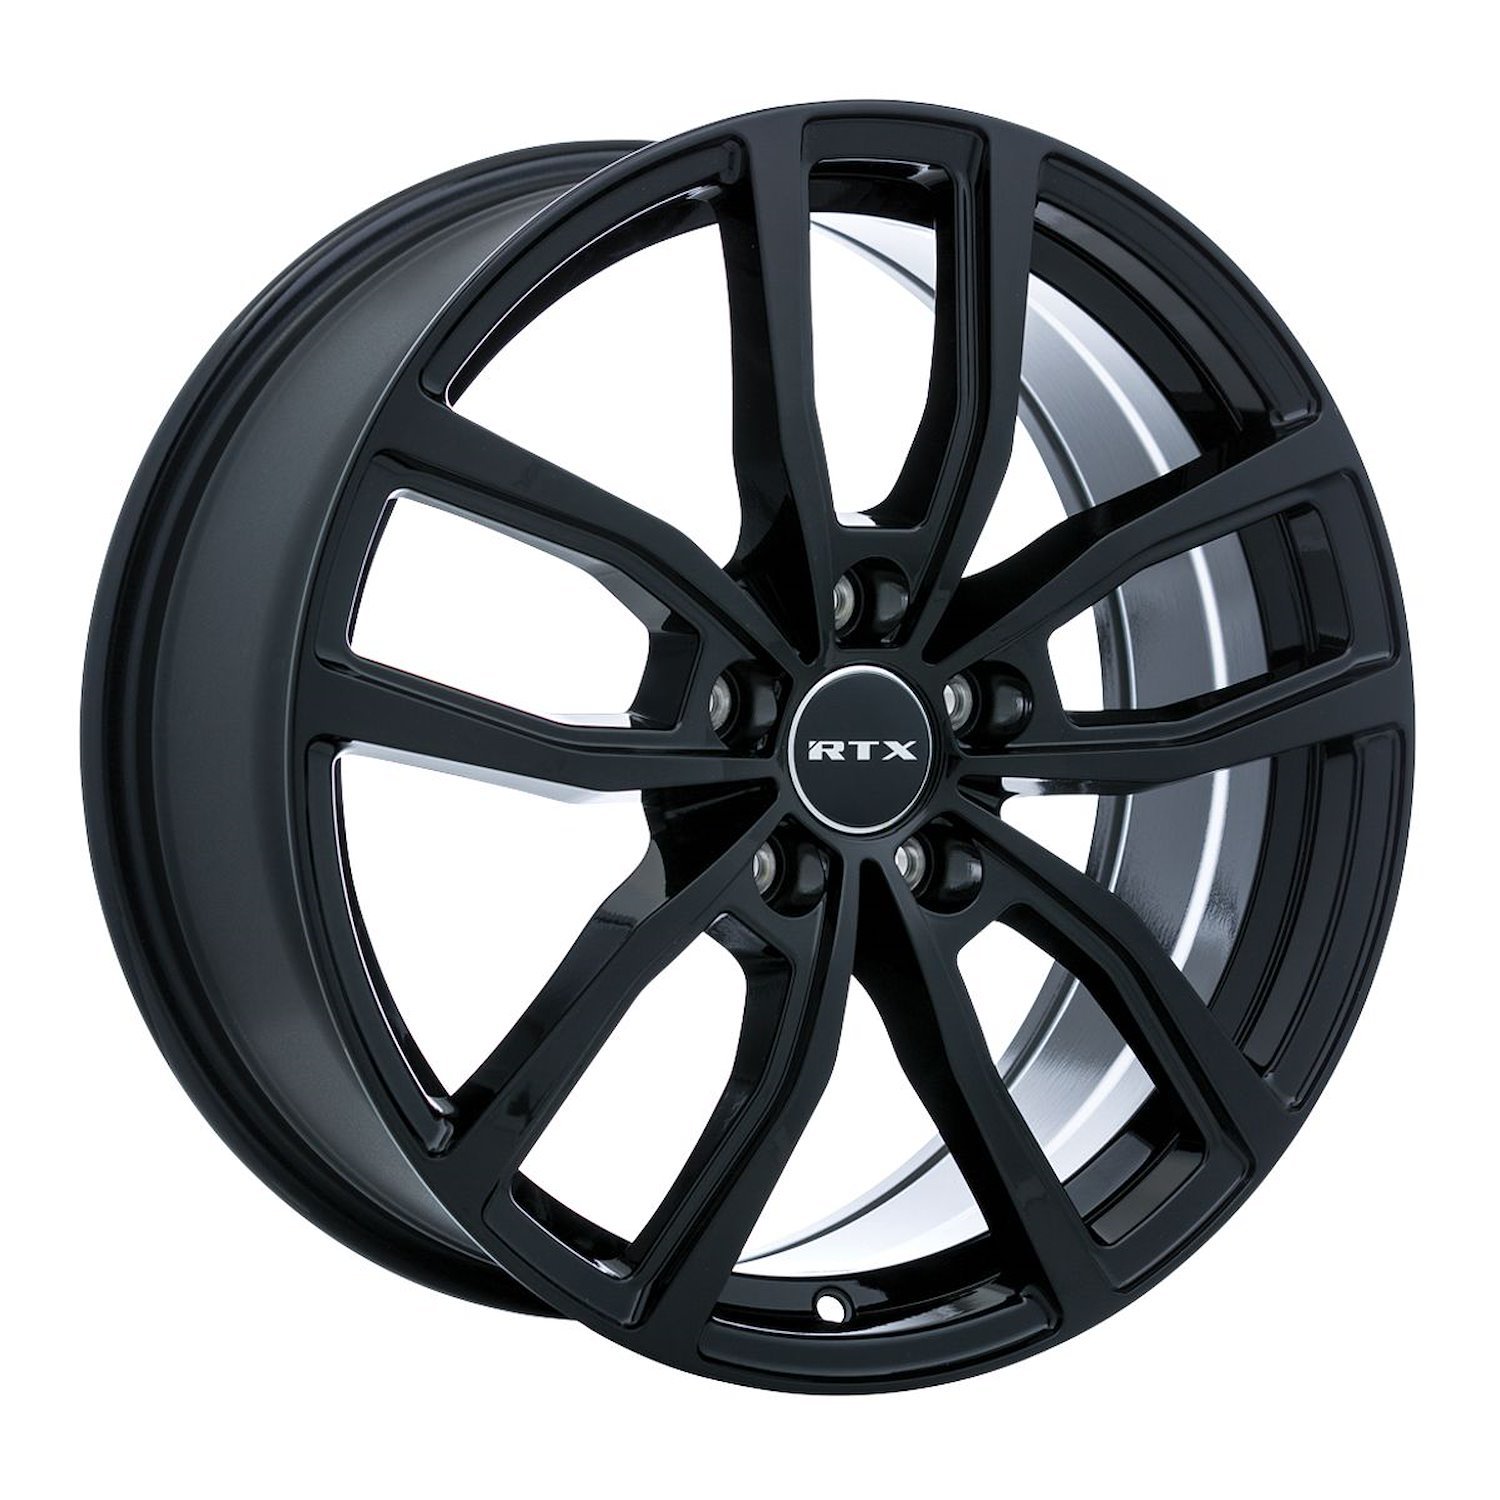 163704 RTX-Series Solstice Wheel [Size: 18" x 7.50"] Gloss Black Finish